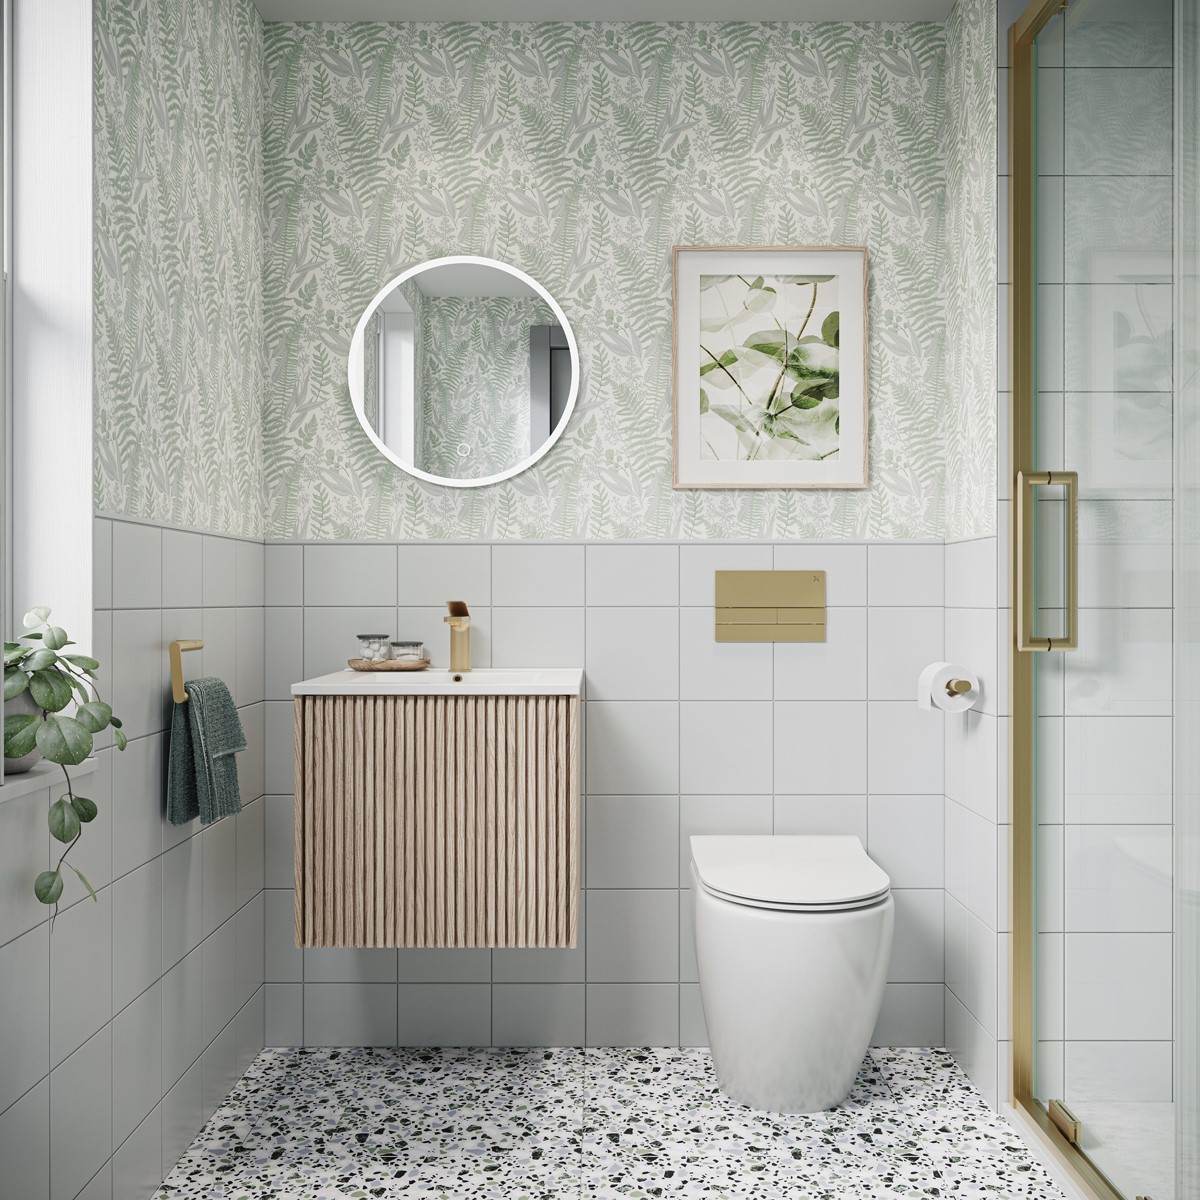 Luxury Bathroom Design Ideas For Your Home | Design Cafe